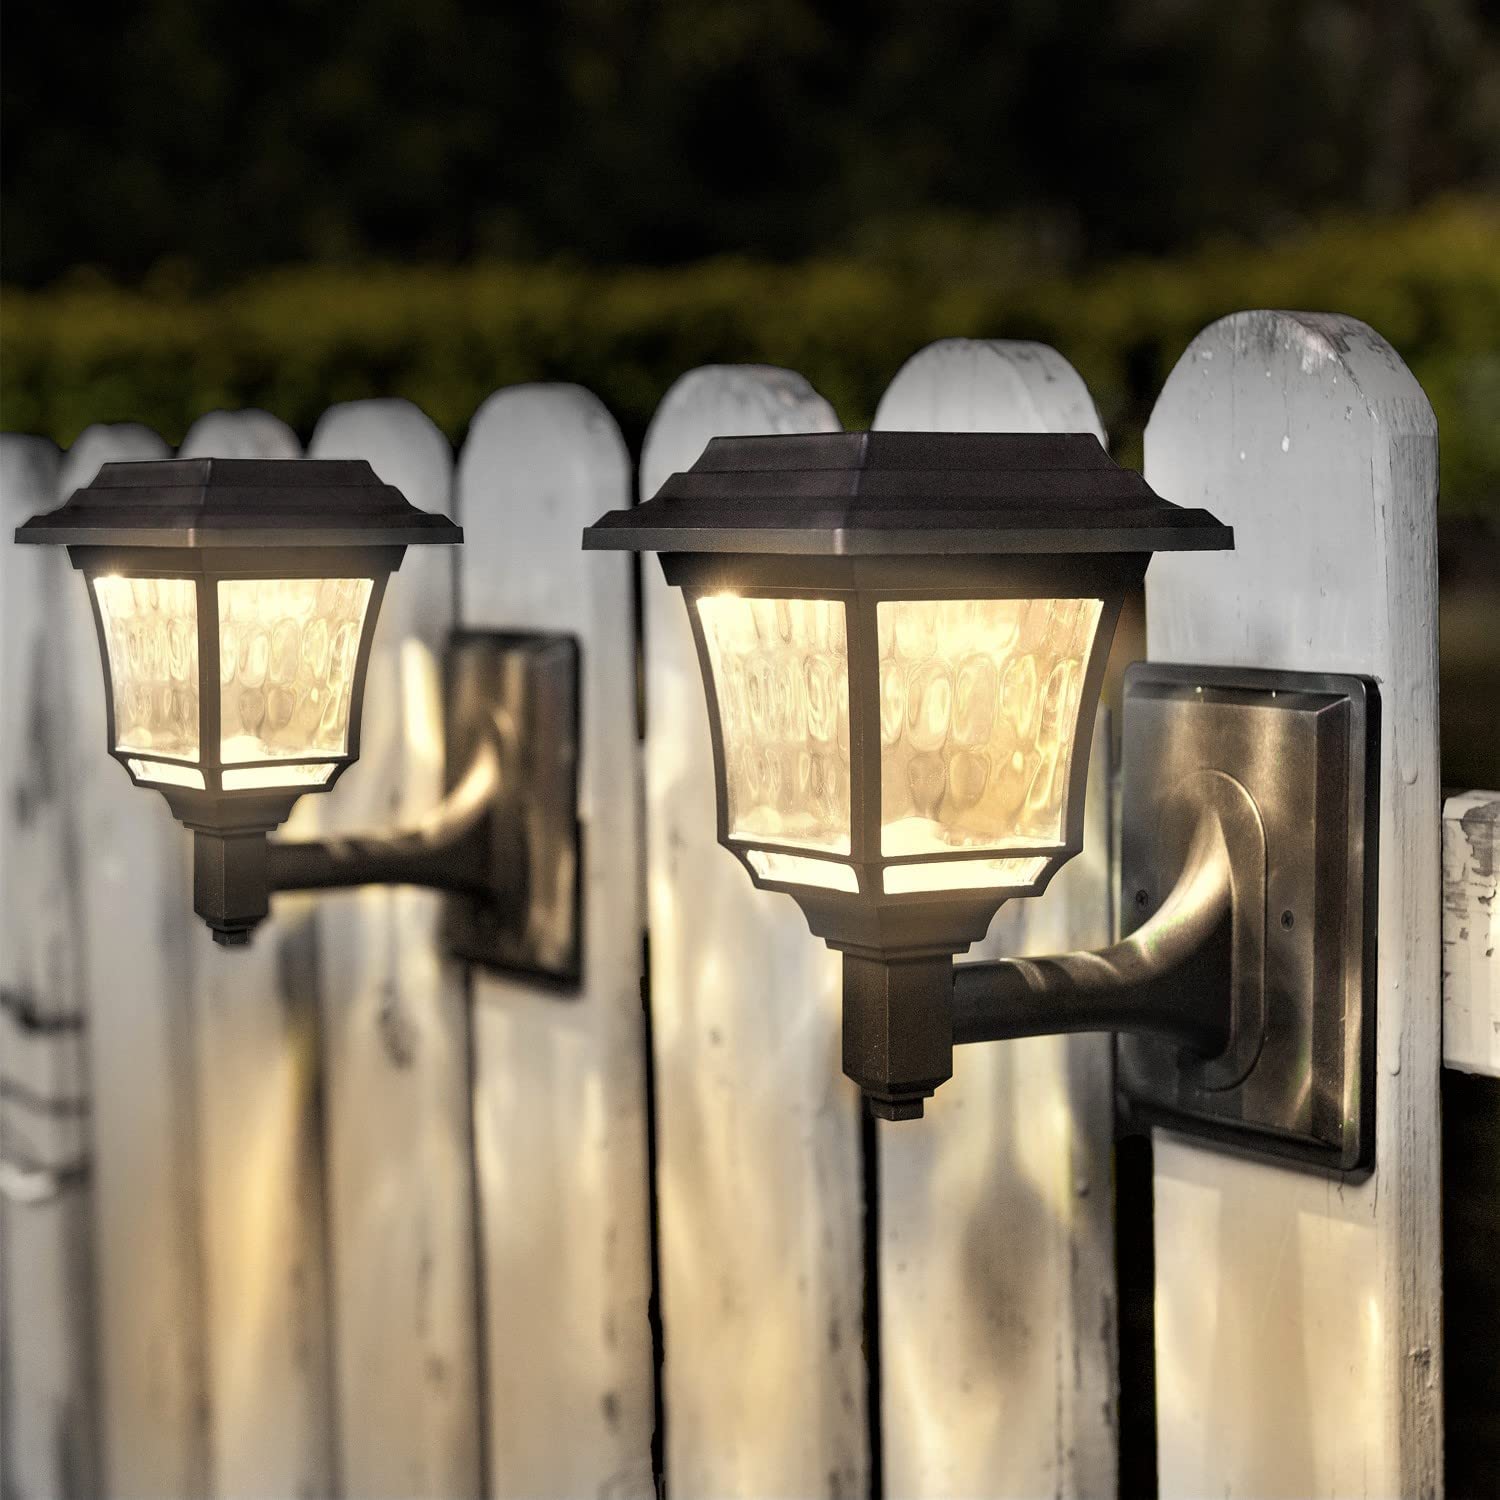 LeiDrail Solar Fence Lights Outdoor, 2 Pack 2 Modes LED Sola | SolarLights